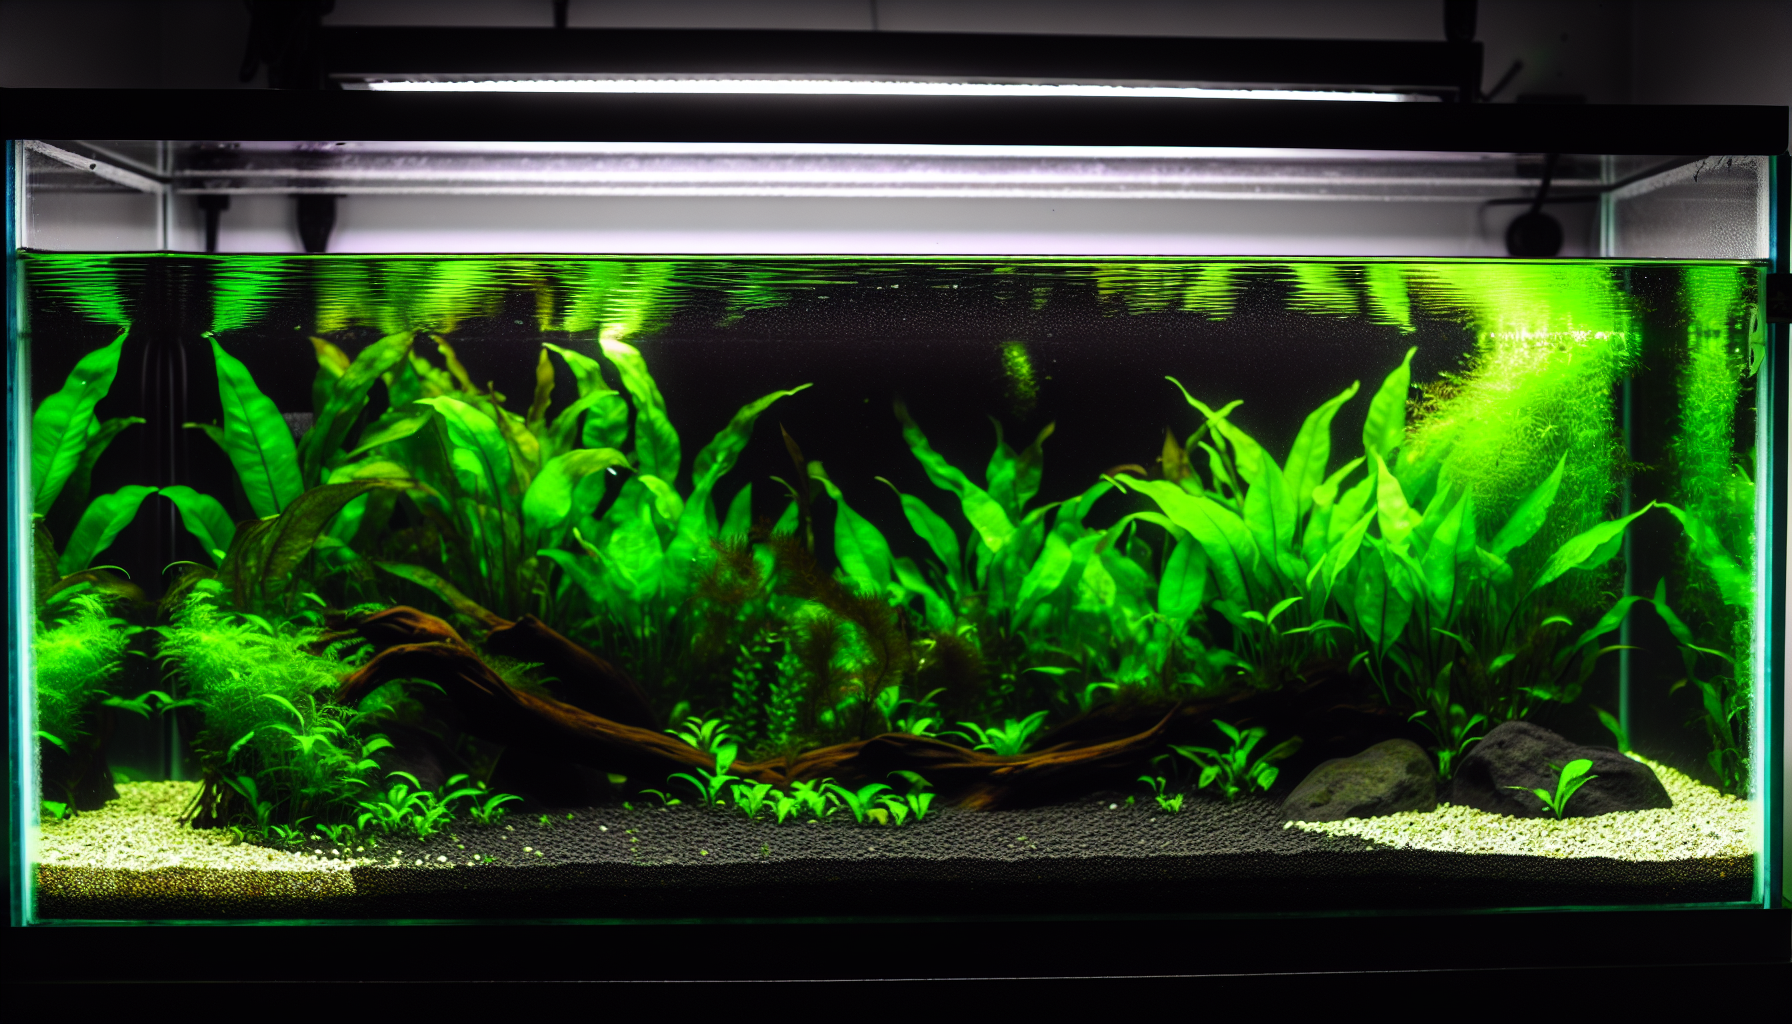 Aquarium with well-balanced plant growth